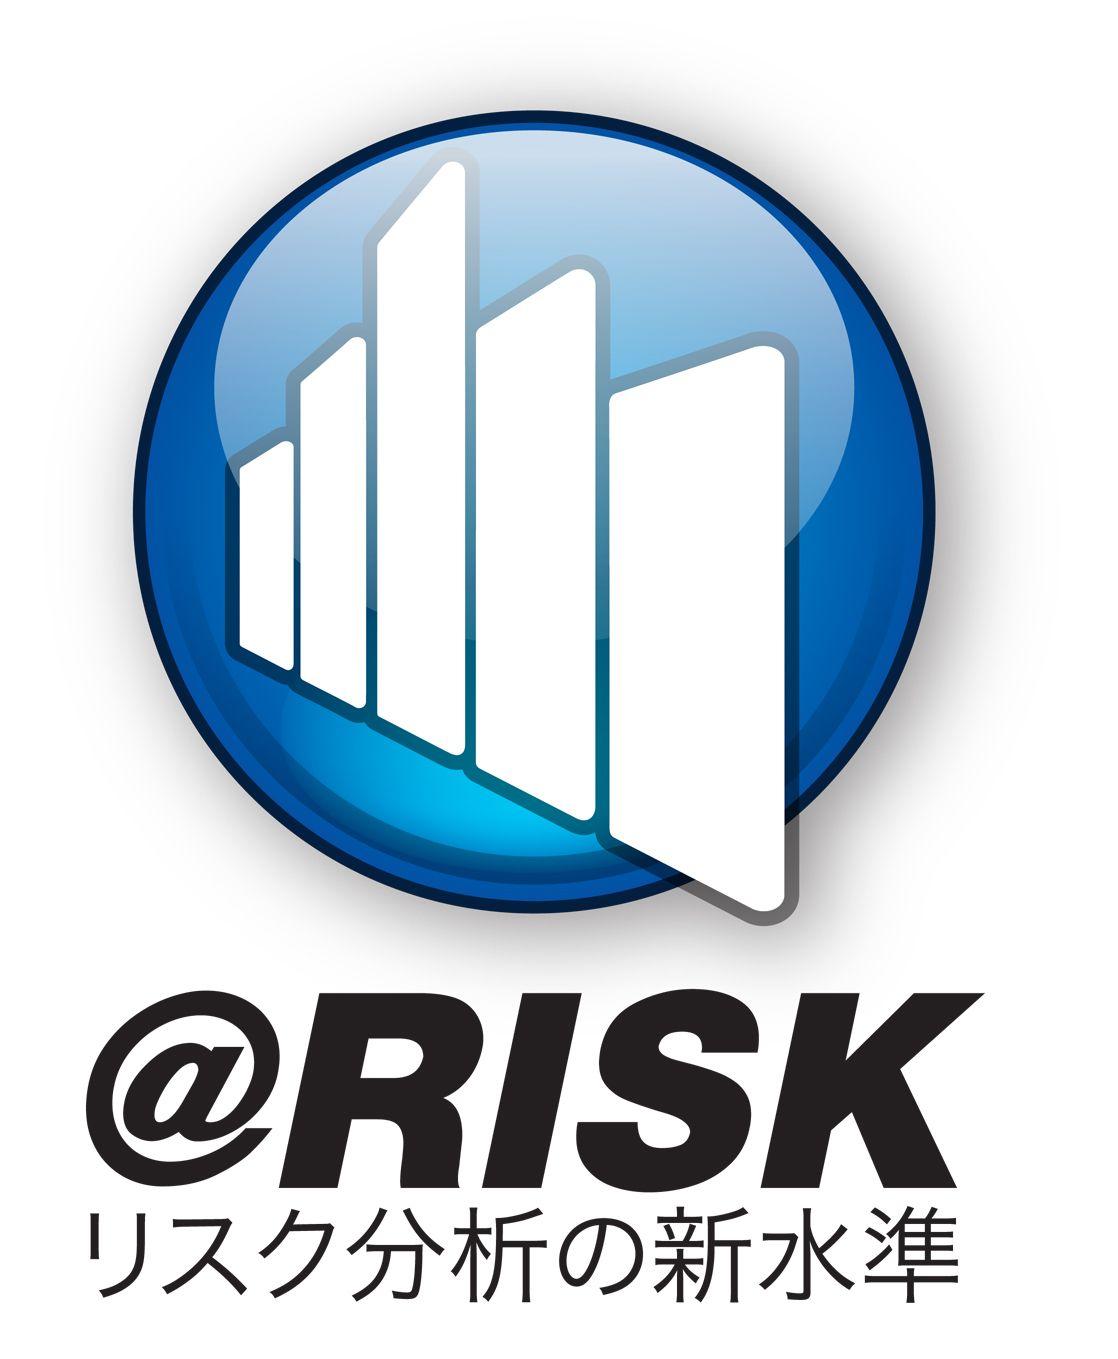 Risk Logo - Image Gallery, Risk Analysis, Decision Analysis, Monte Carlo